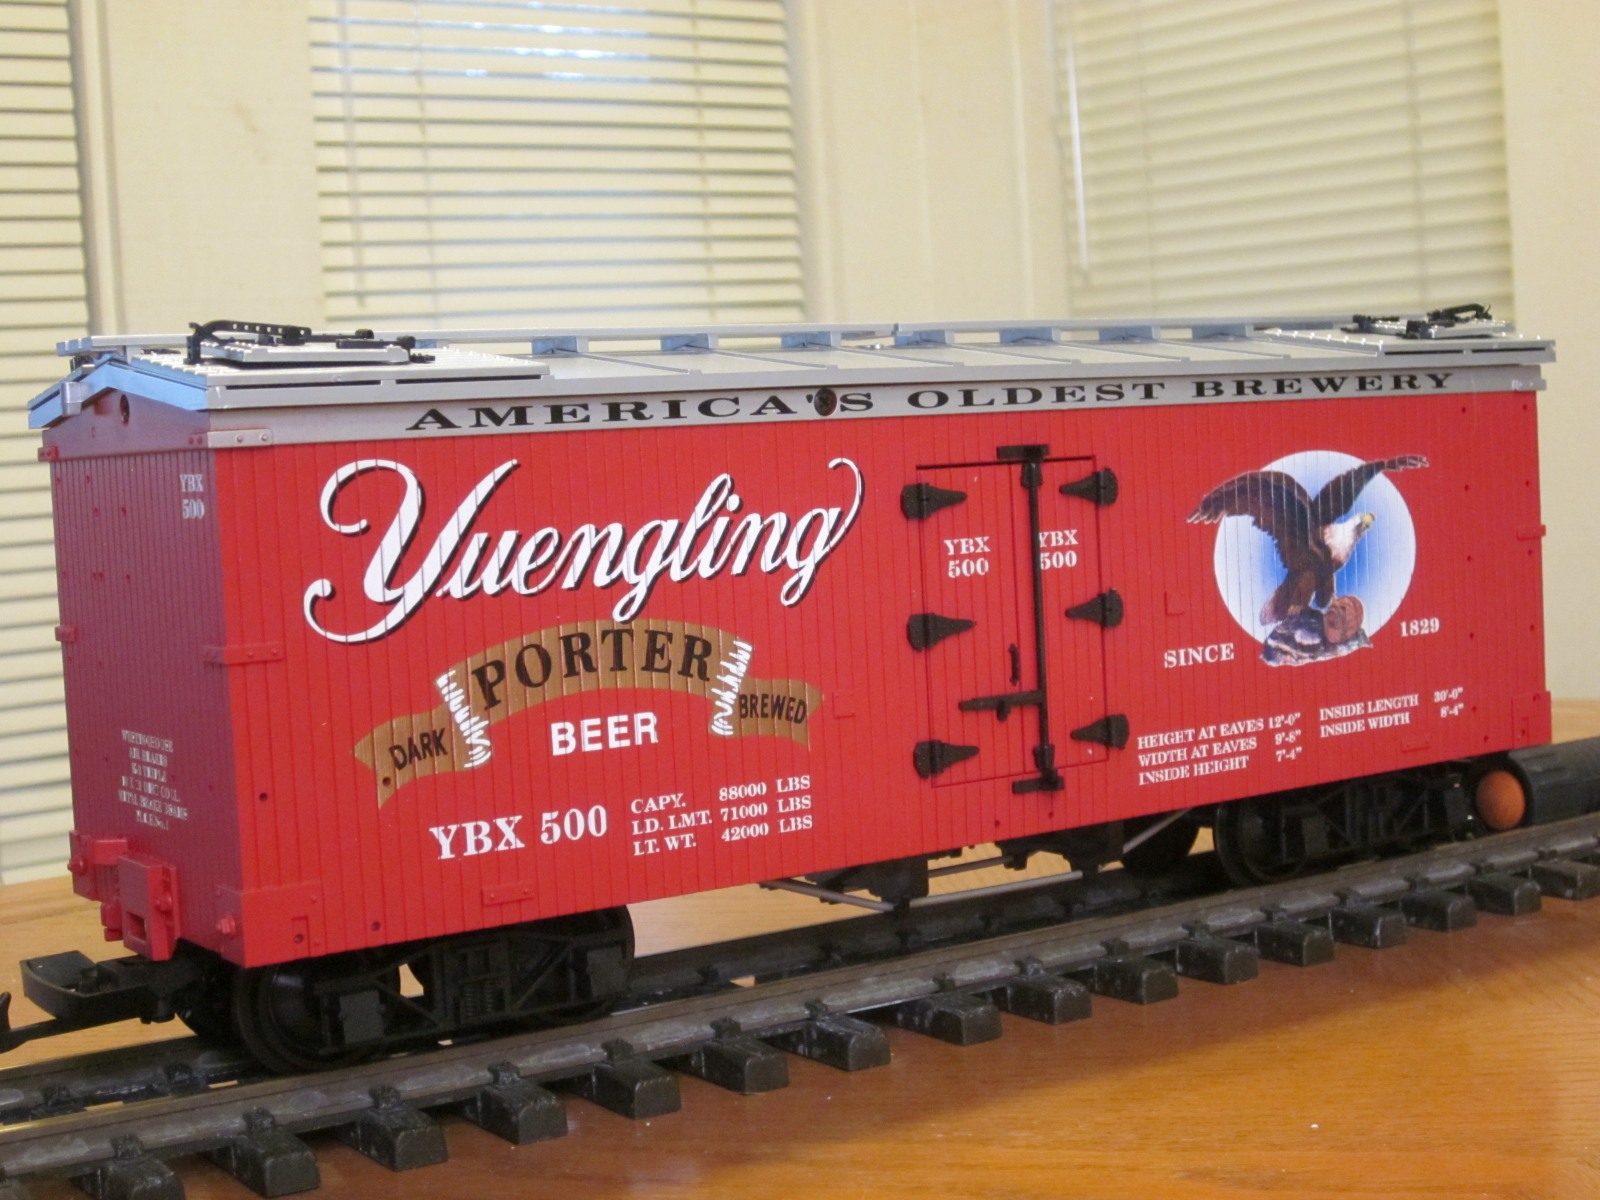 R16272 Yengling Porter Beer YBX 500